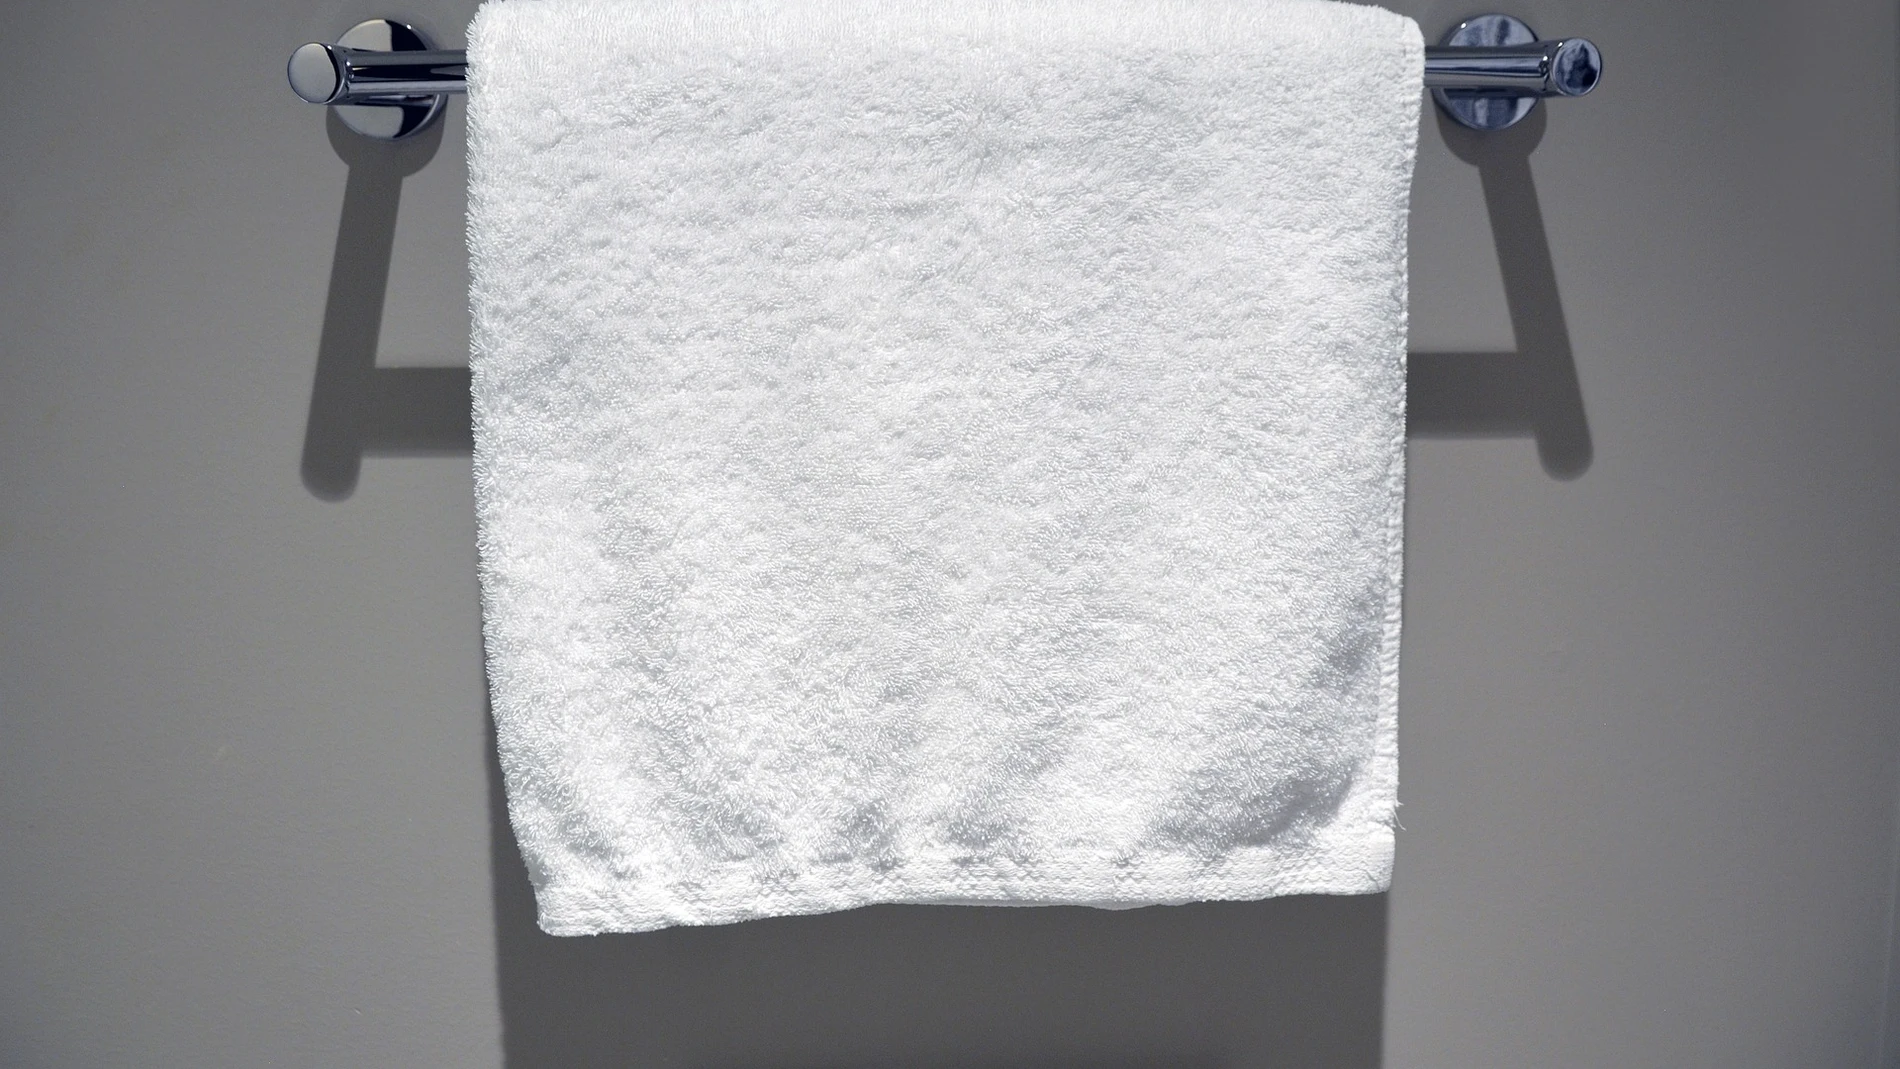 Короткое полотенце. Полотенце висит. Полотенце махровое белый. Белое полотенце висит. Полотенца для ванны висячие.